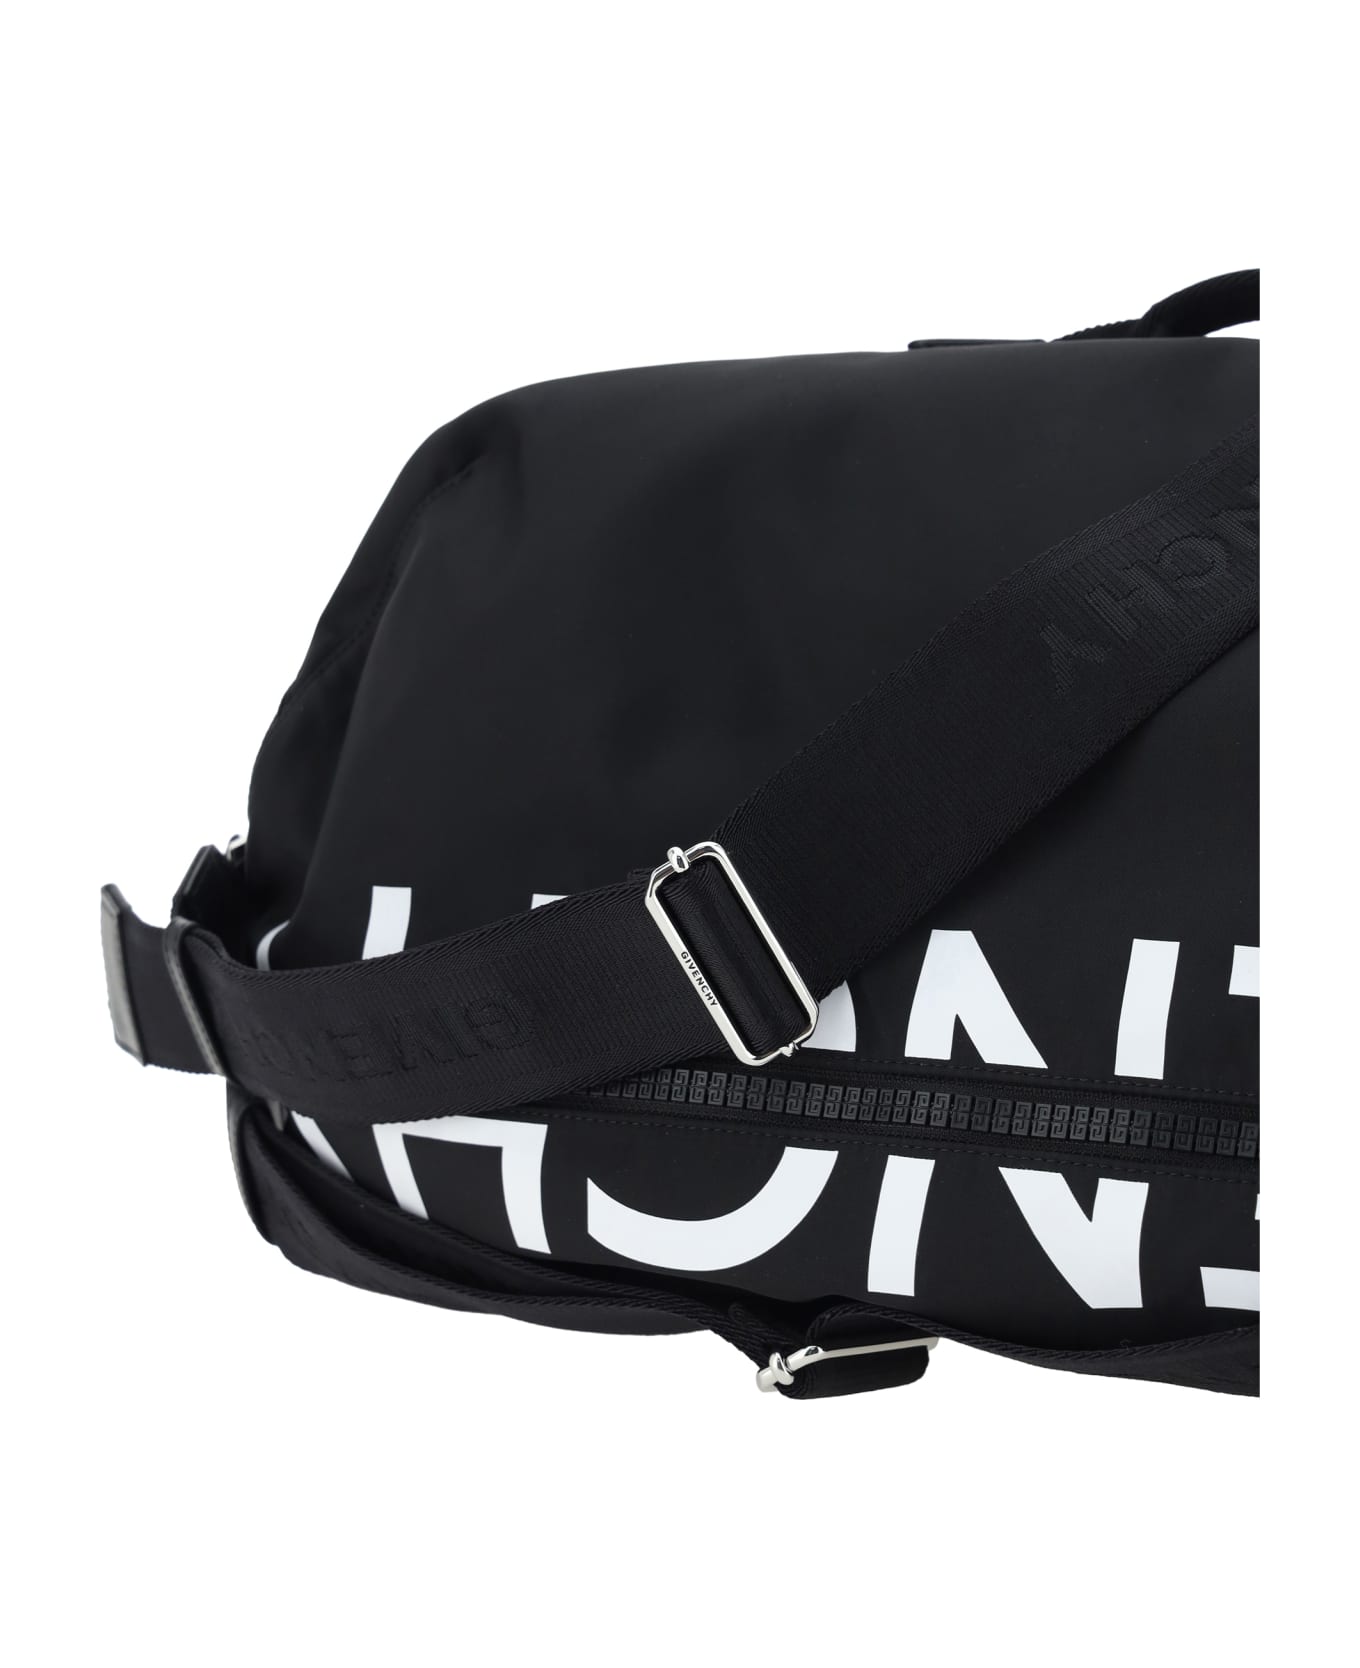 Givenchy G-zip Backpack - Black